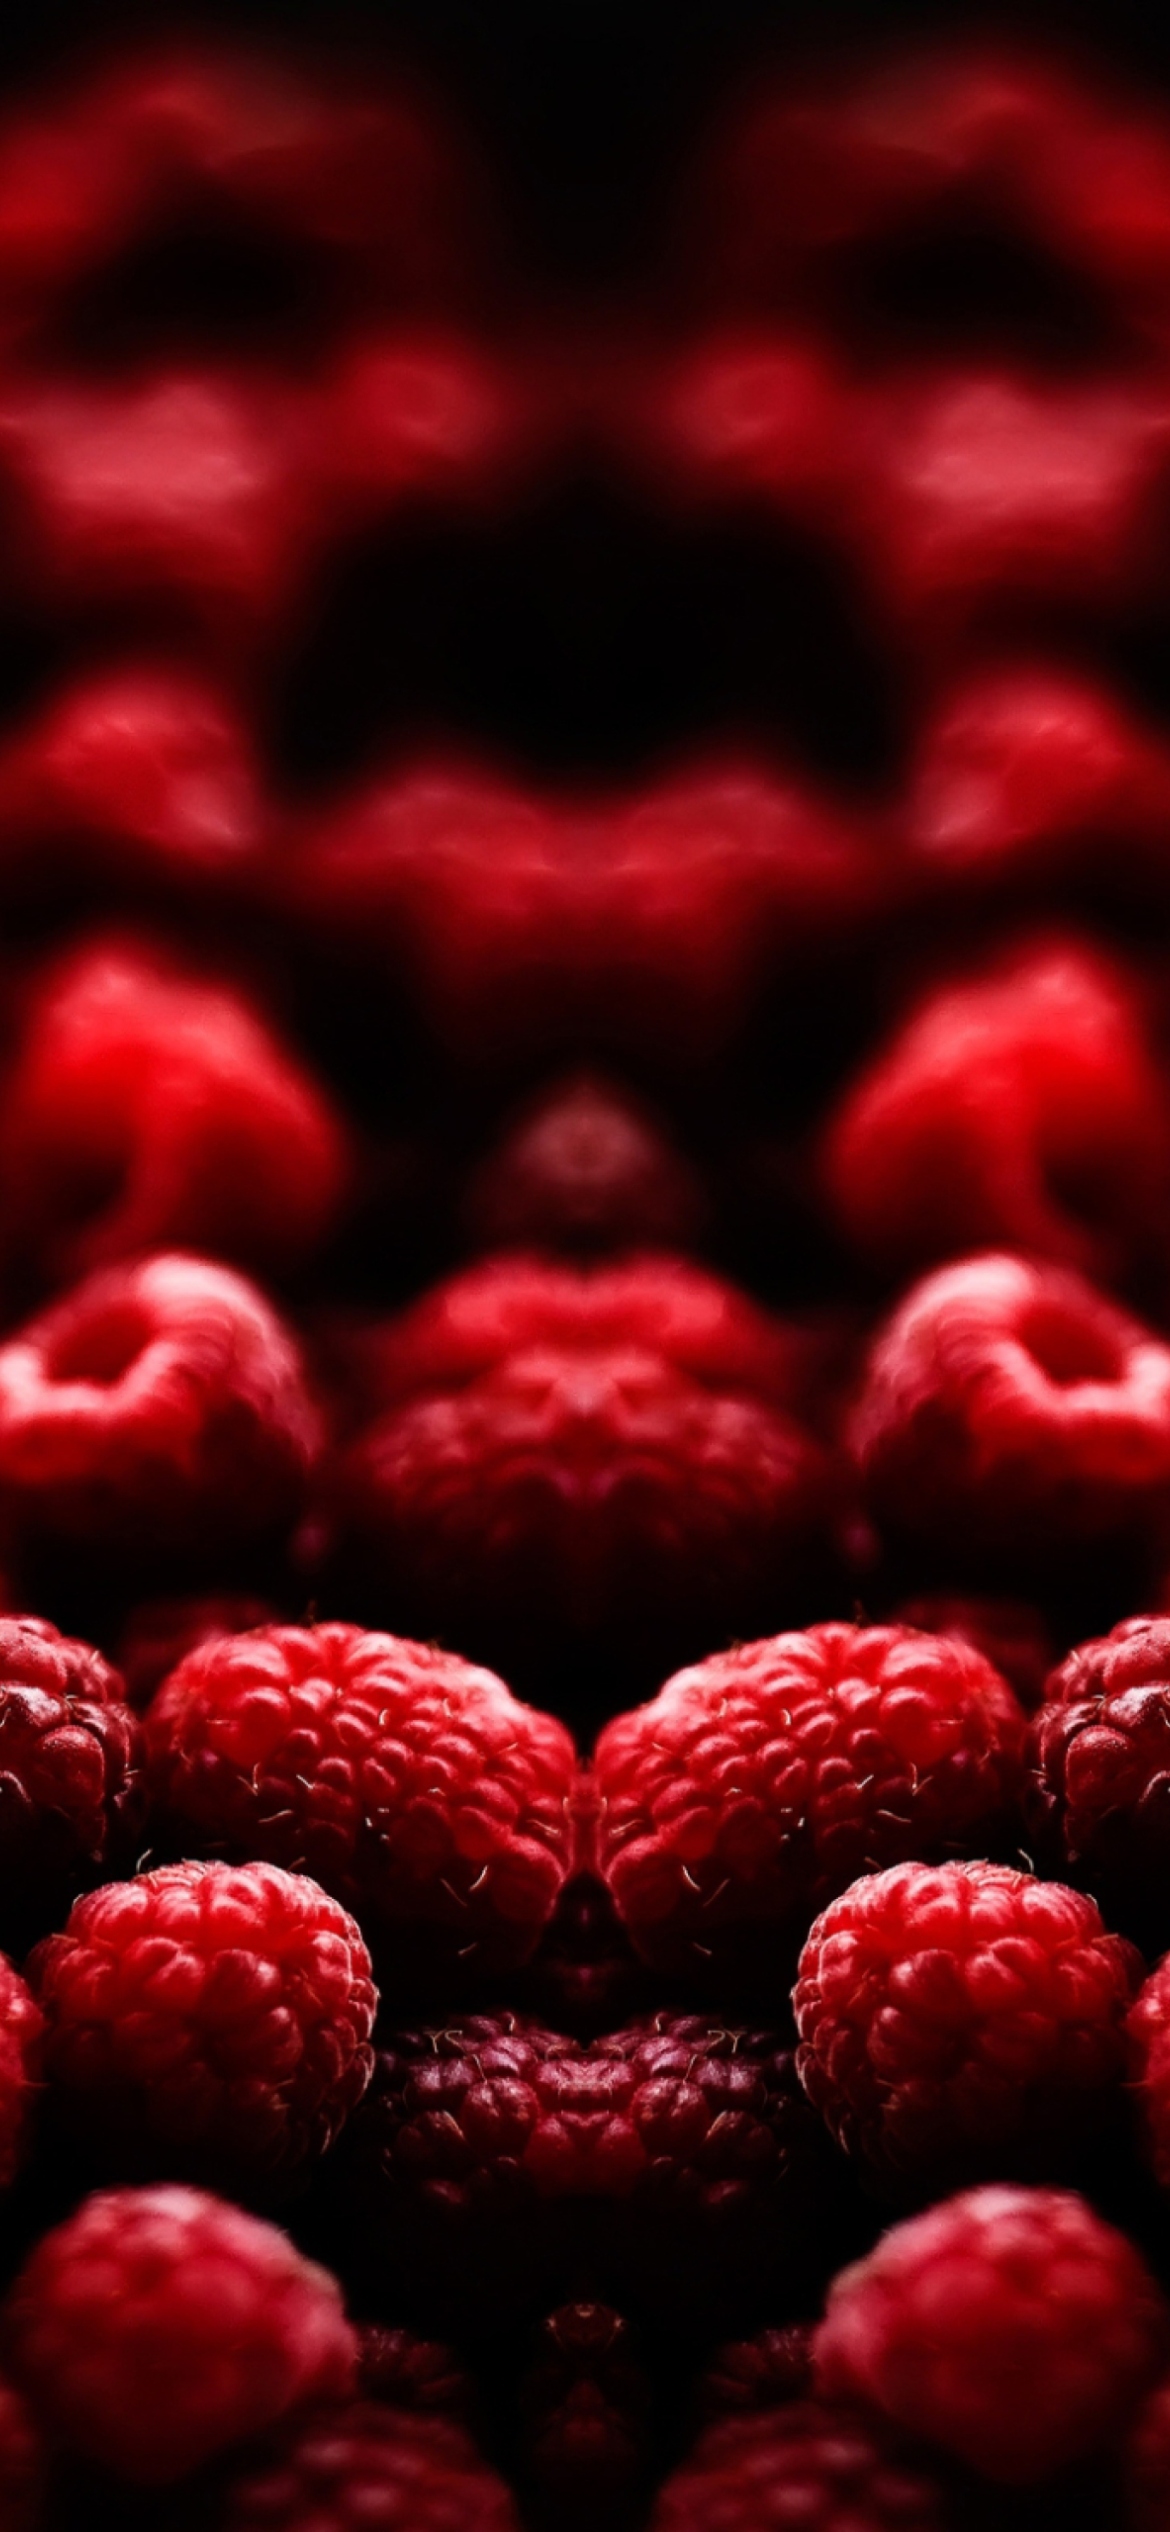 Raspberries wallpaper 1170x2532